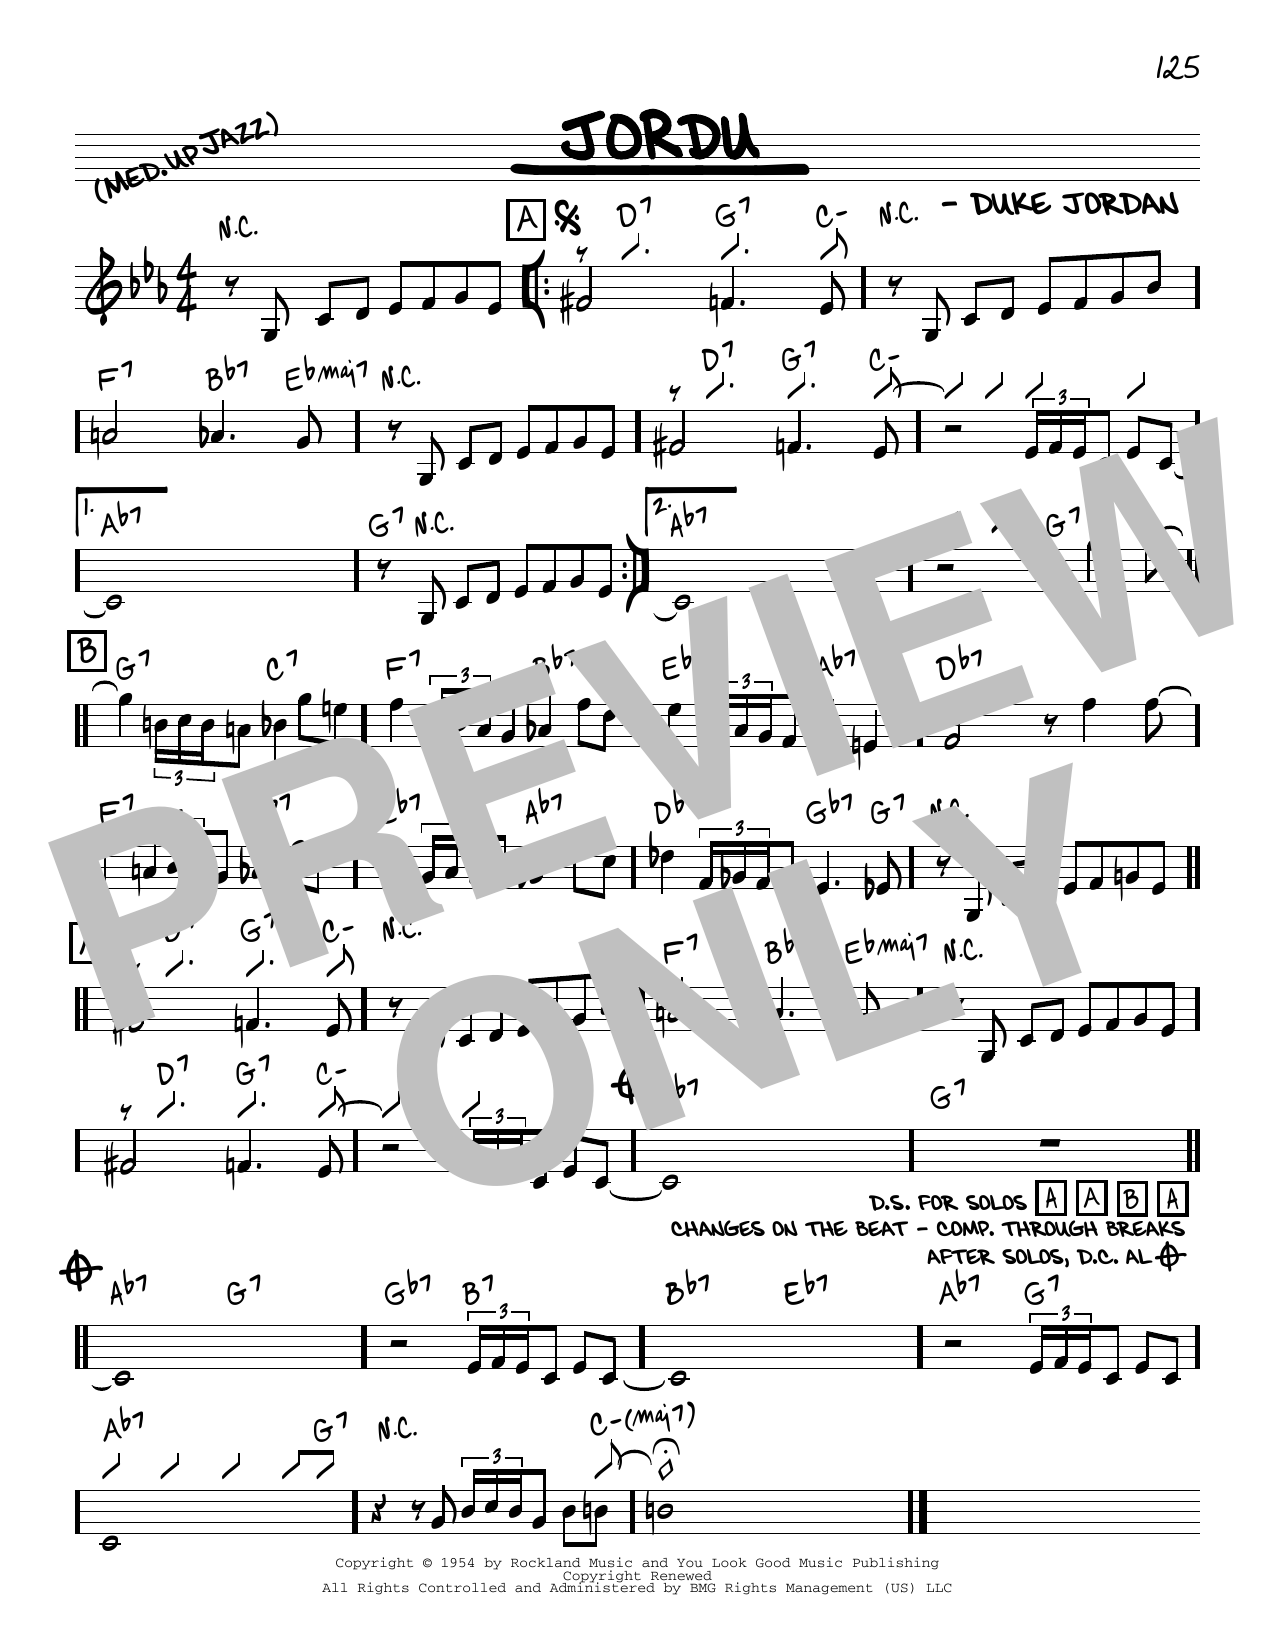 Duke Jordan Jordu sheet music notes and chords arranged for Piano Solo